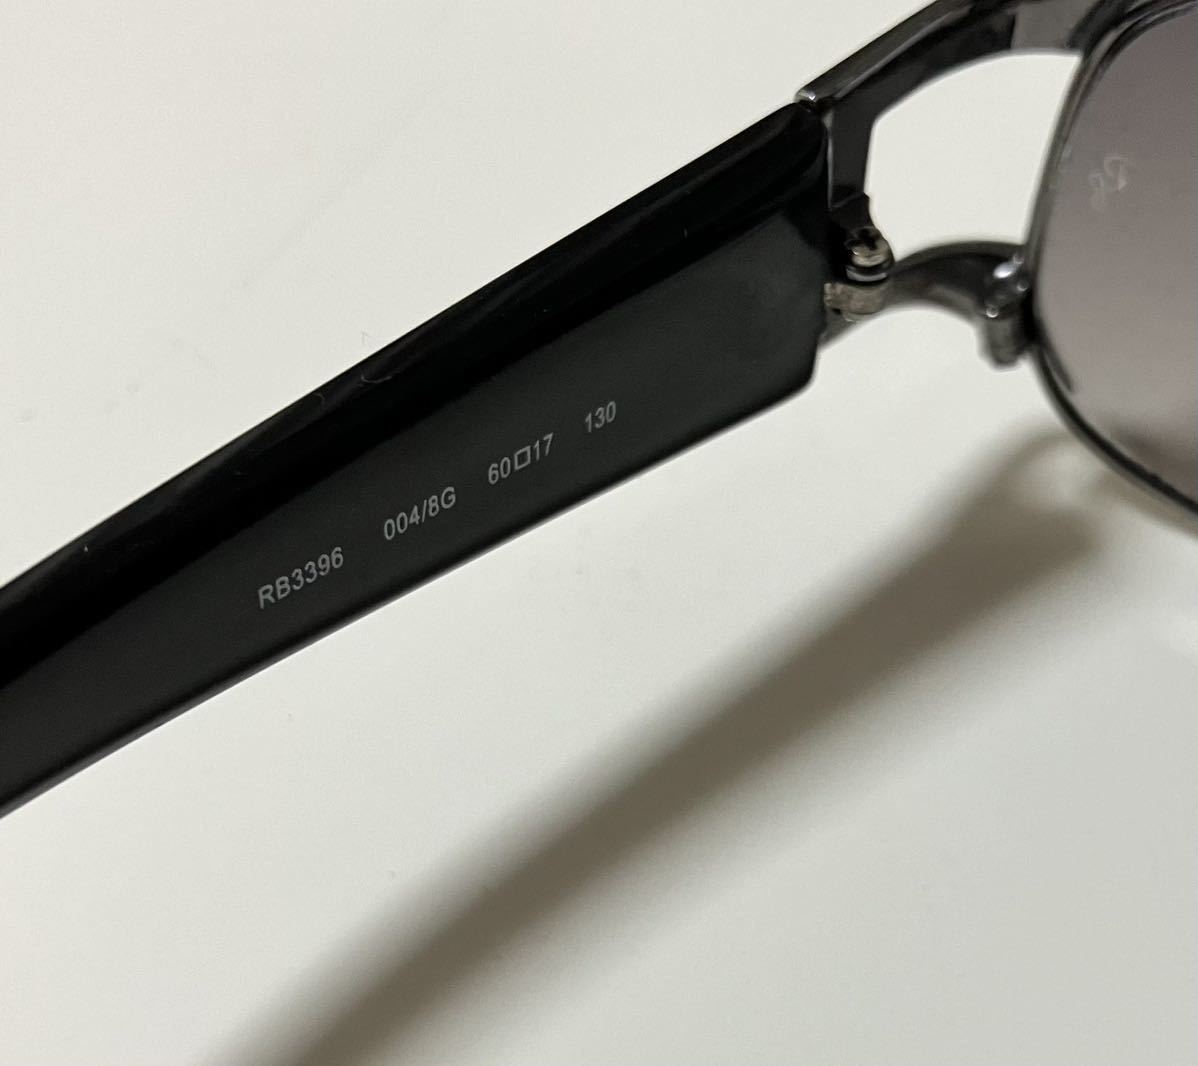  RayBan Ray-Ban солнцезащитные очки RB3396-004/8G